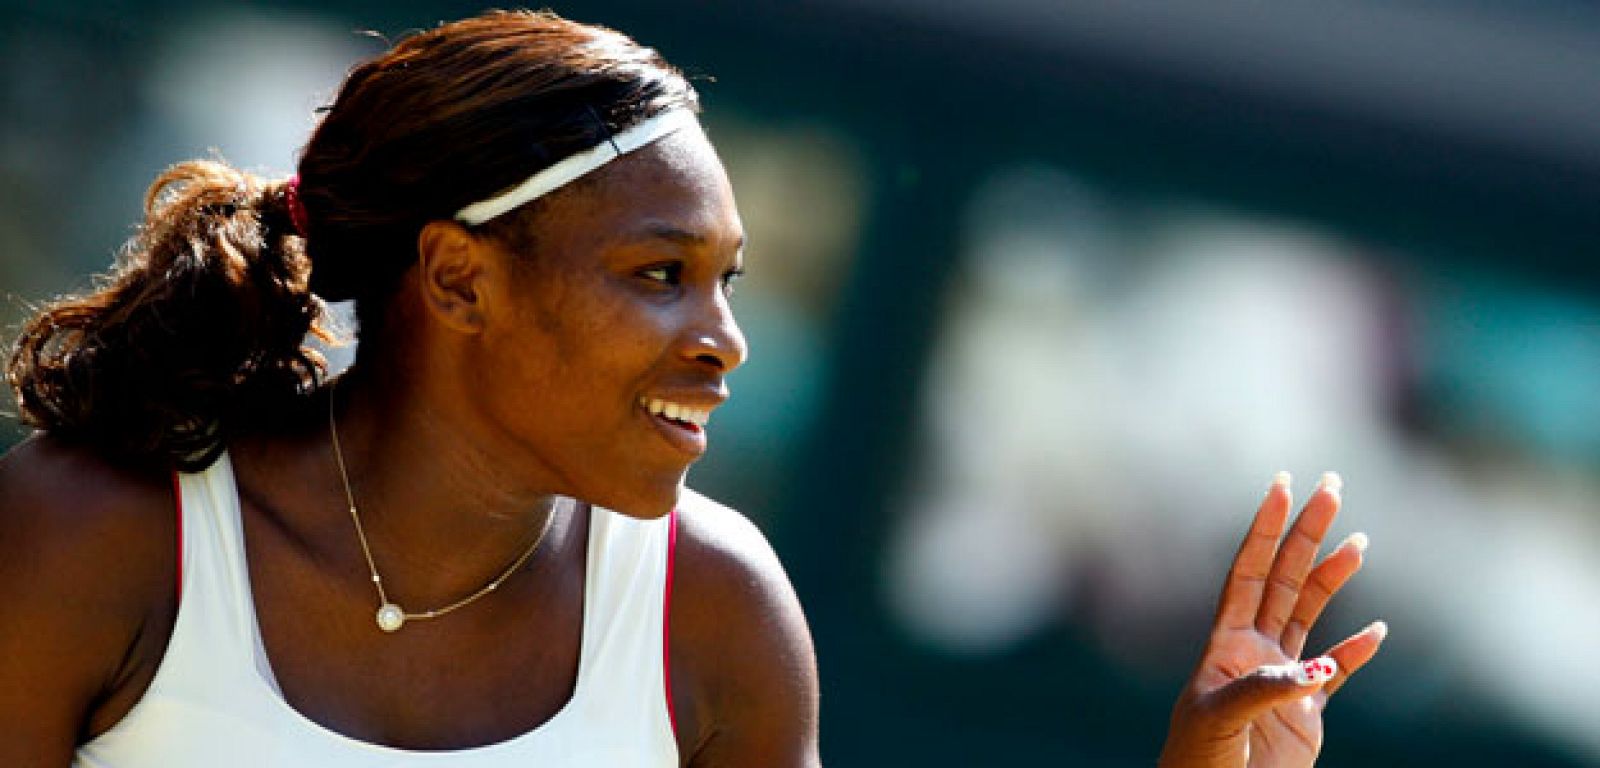 Serena Williams se ha impuesto a Sharapova y consuma su venganza.